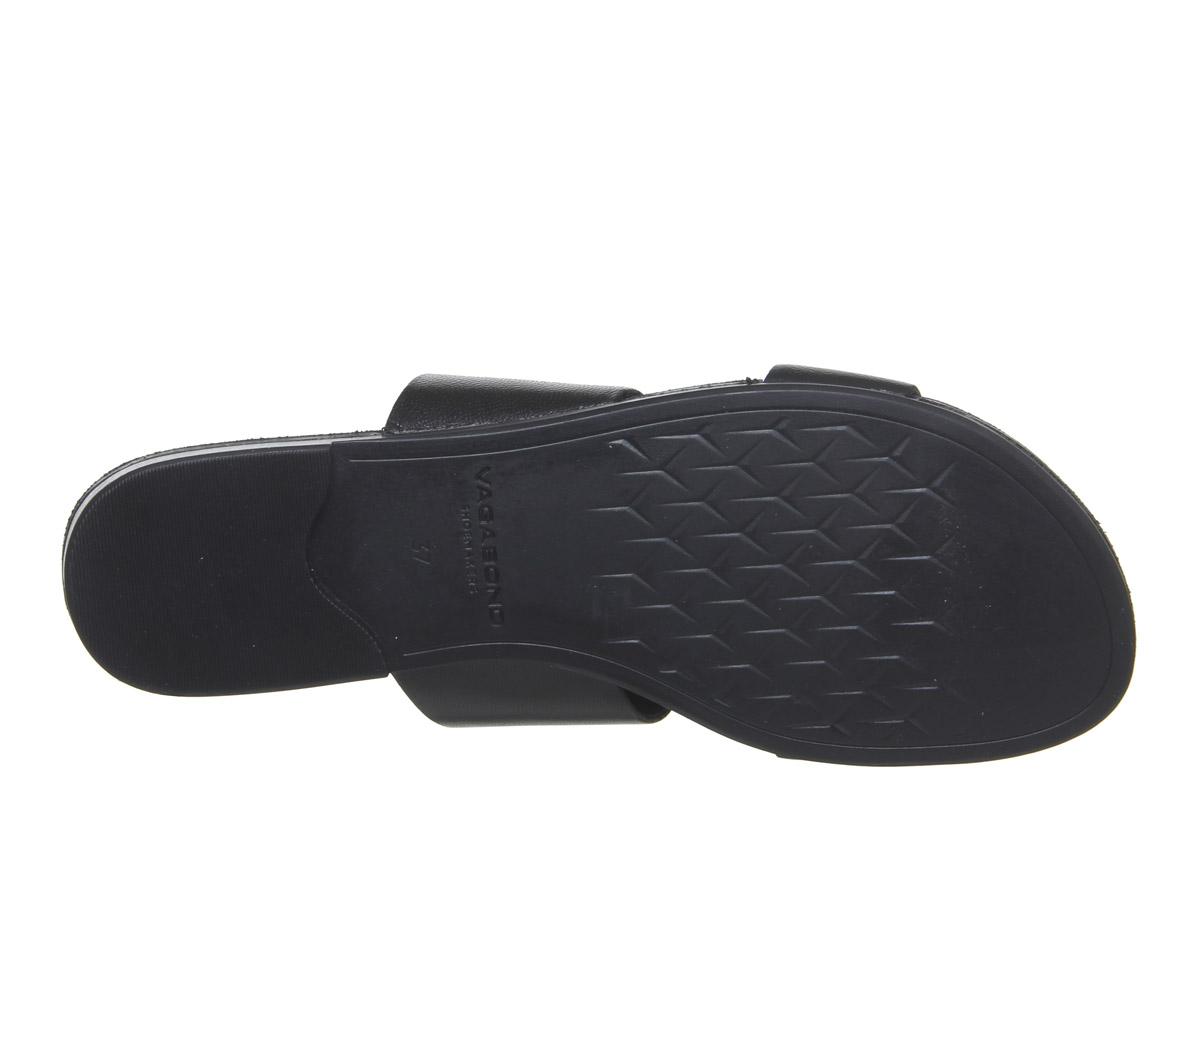 Vagabond Shoemakers Tia Sandals Black - Women’s Sandals